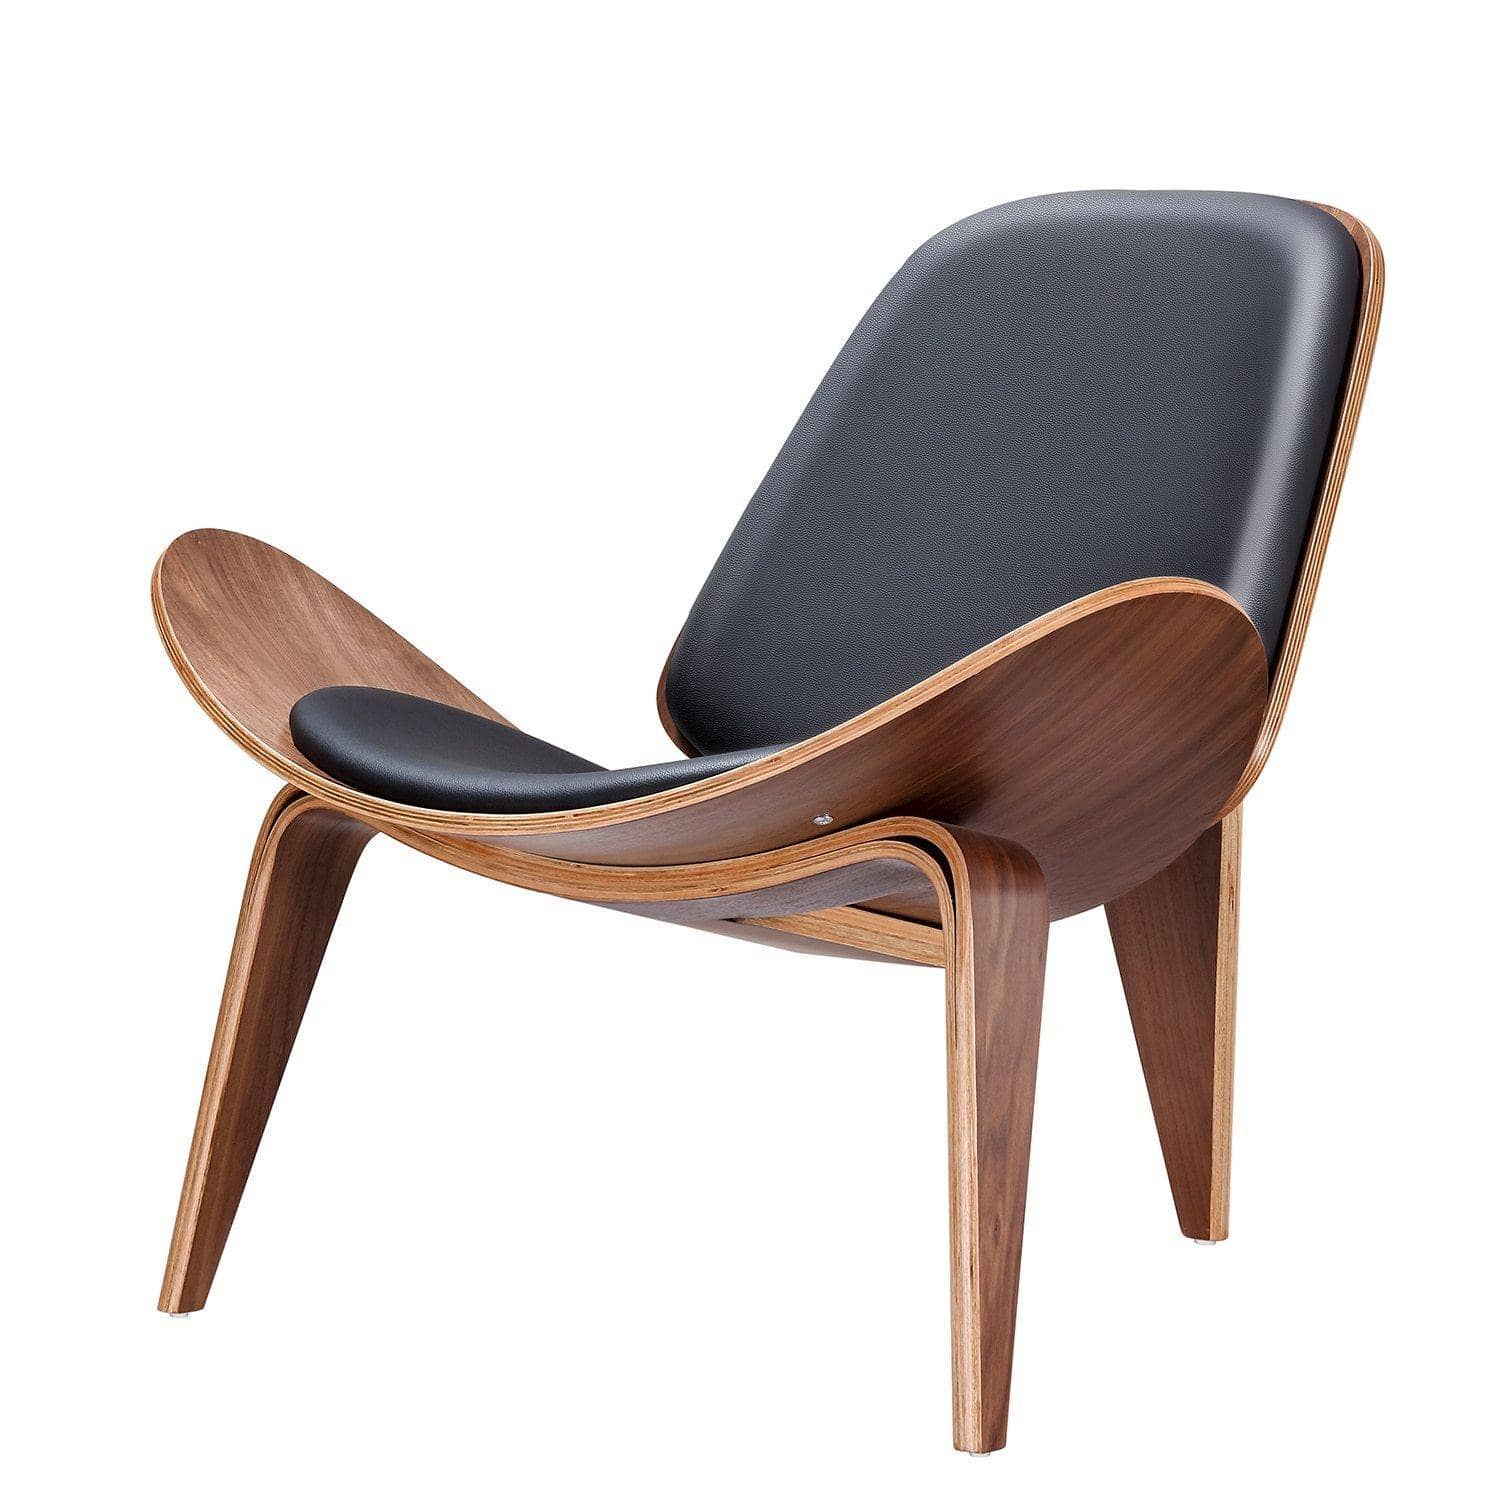 Designer Tripod Smile Living Room Chair - Modern & Chic Furniture